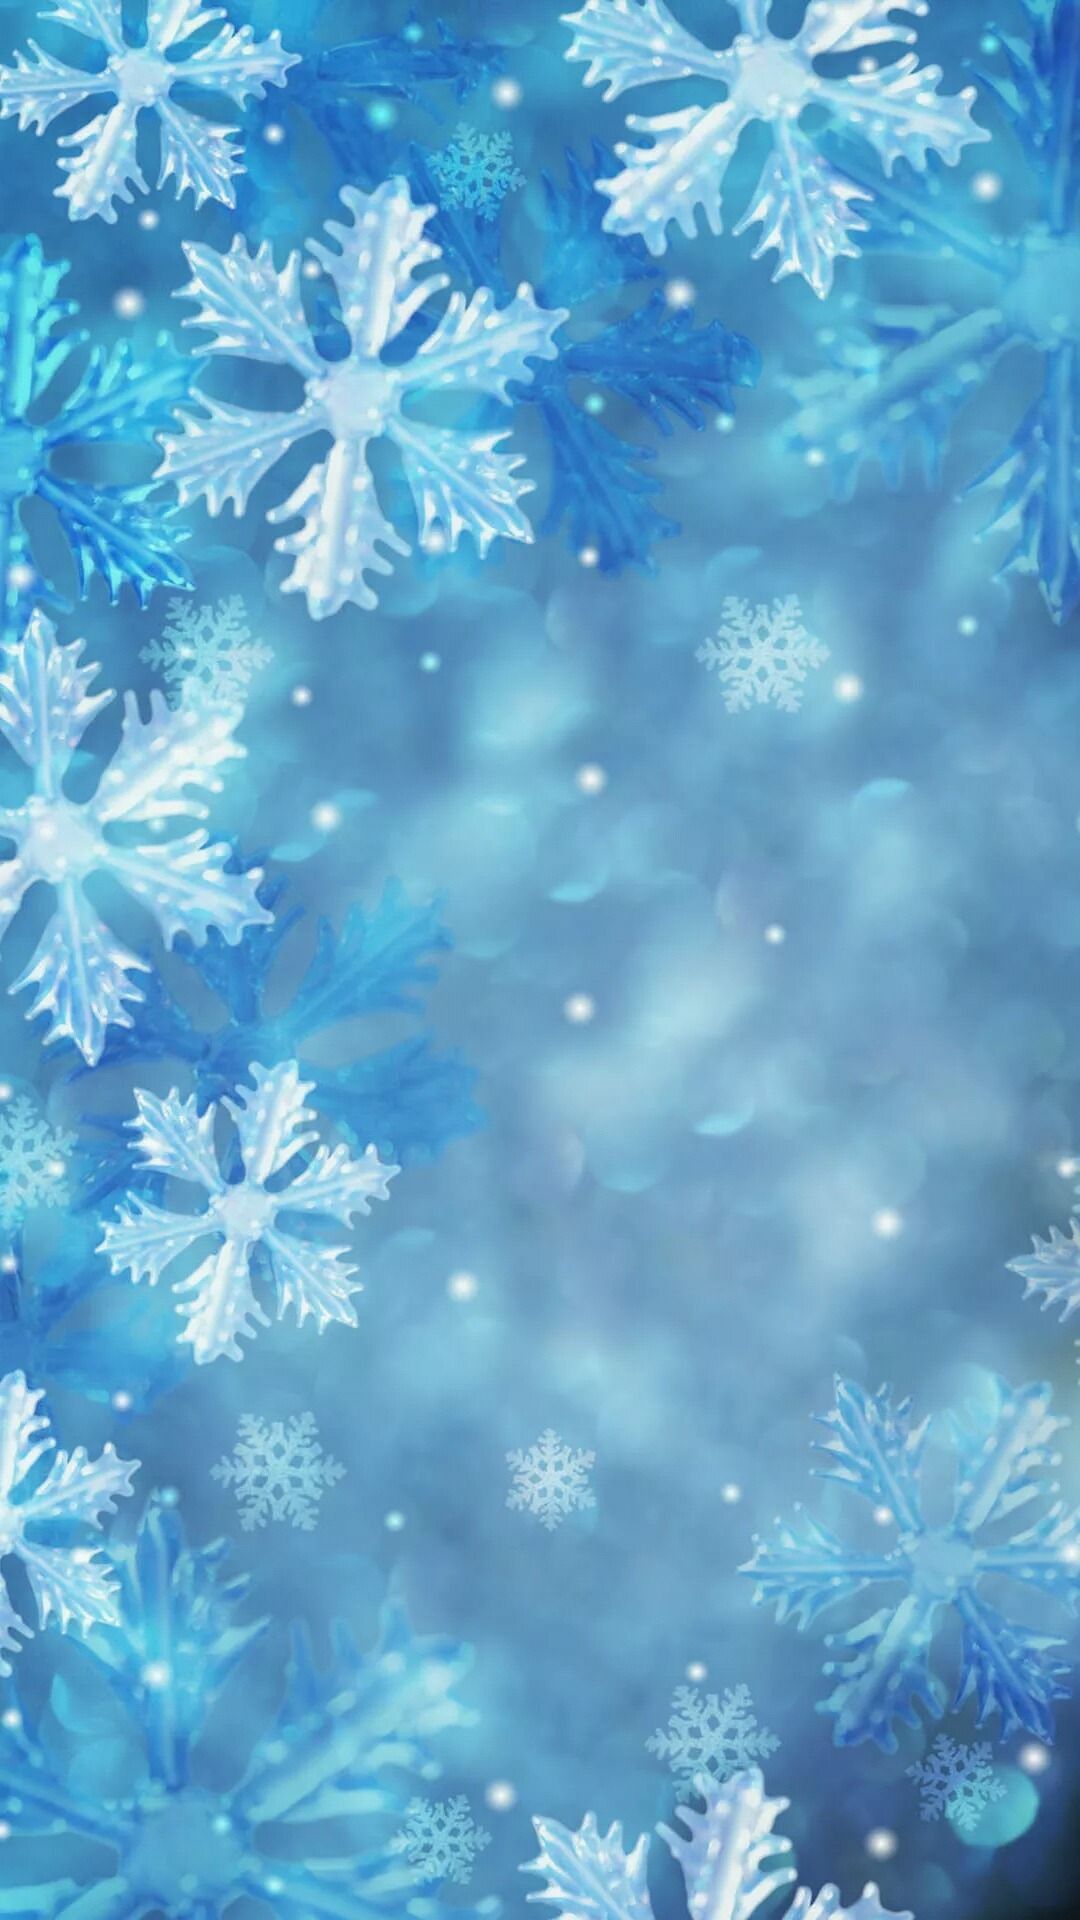 Blue snowflakes to see more #beautiful #snow & #snowflakes #winter wallpaper - Winter wonderland wallpaper, Winter wallpaper, iPhone wallpaper winter